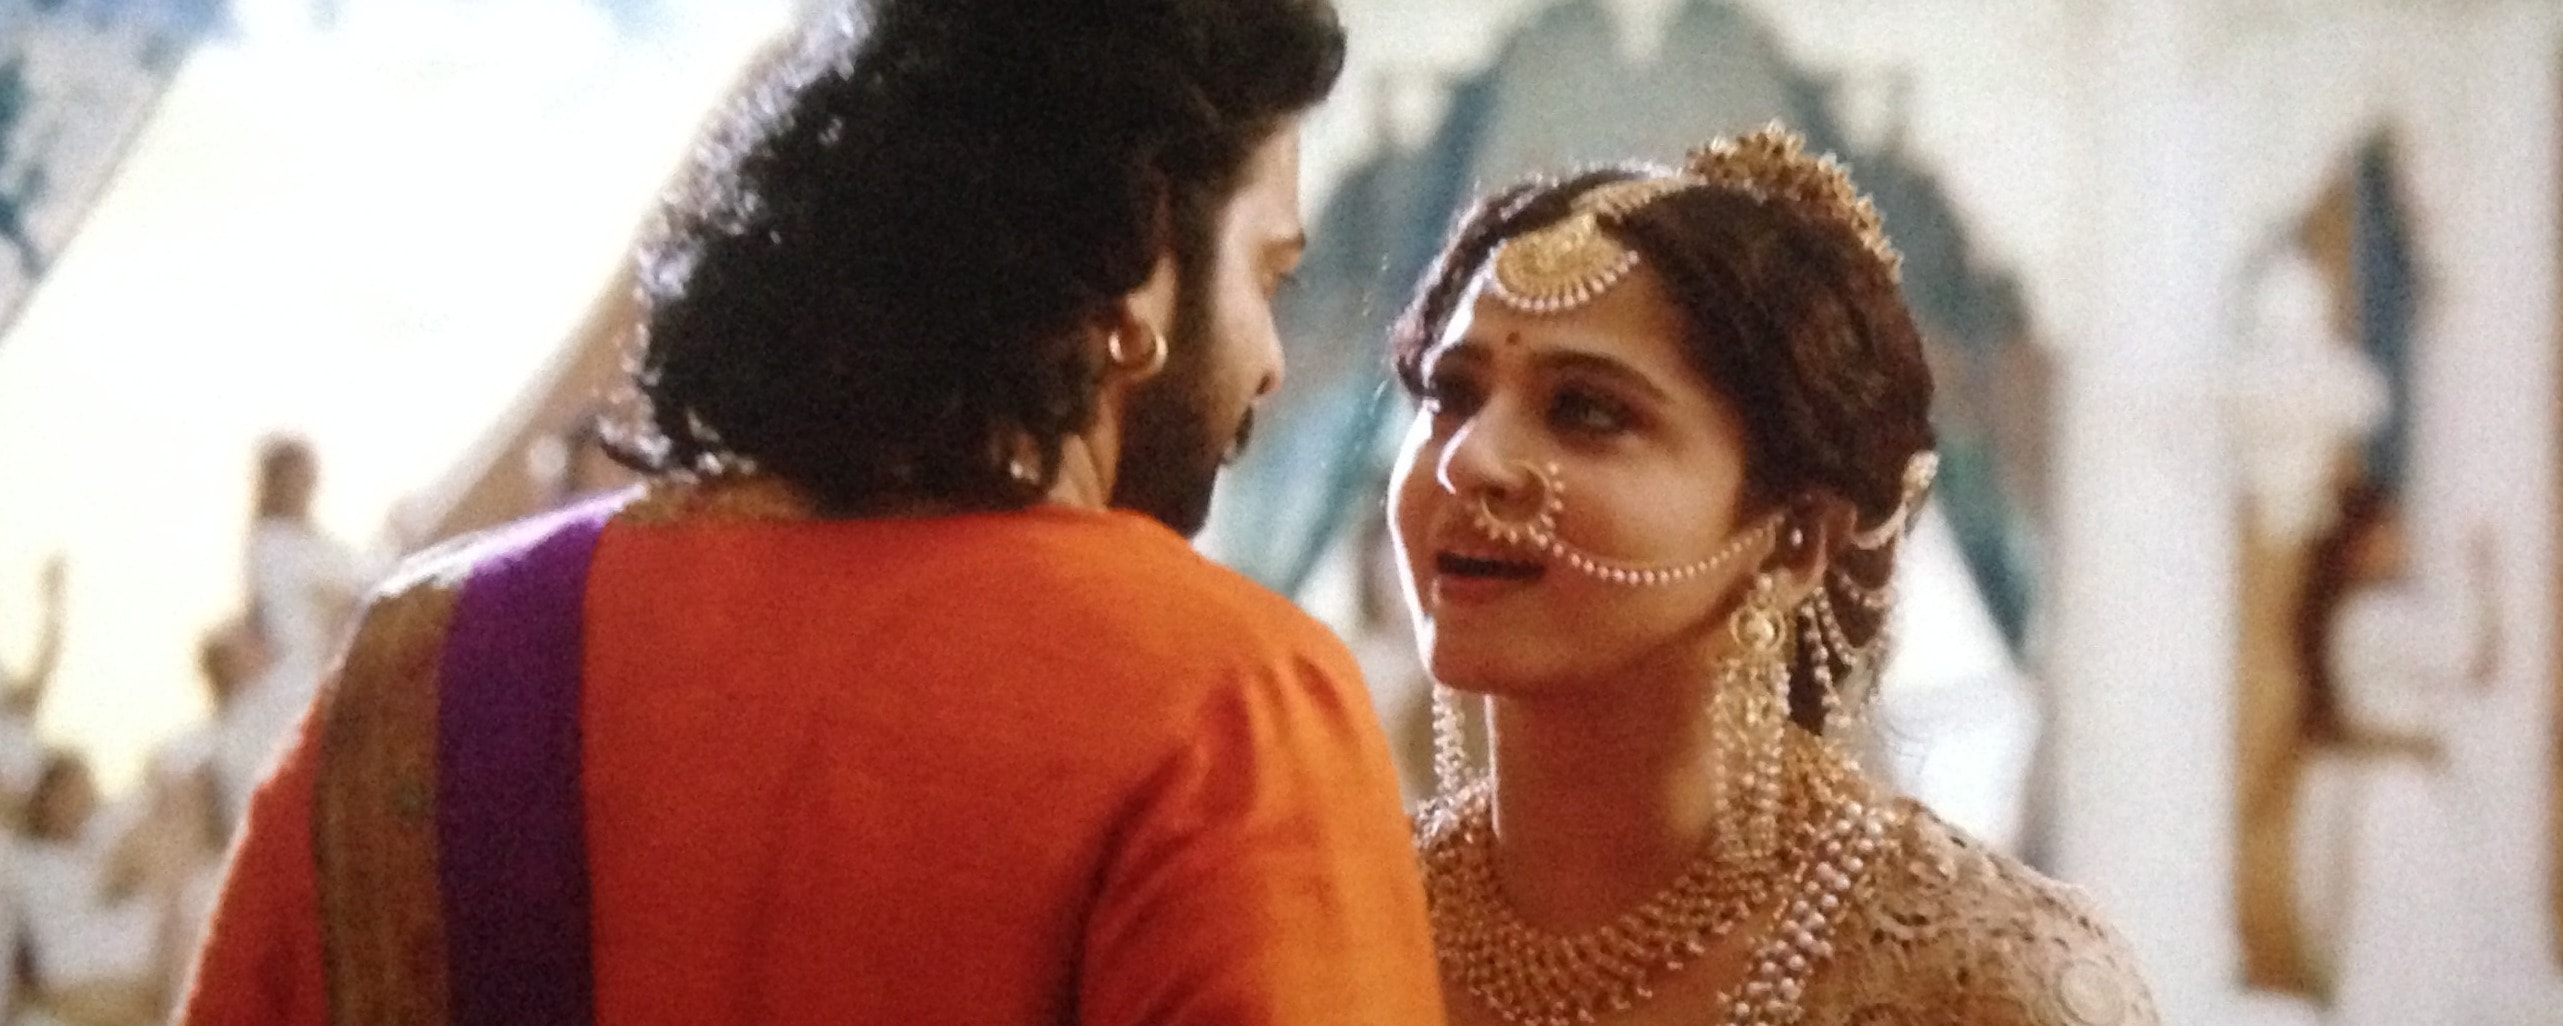 Anushka and Prabhas in Bahubali 2, Anushka nath in Bahubali 2 